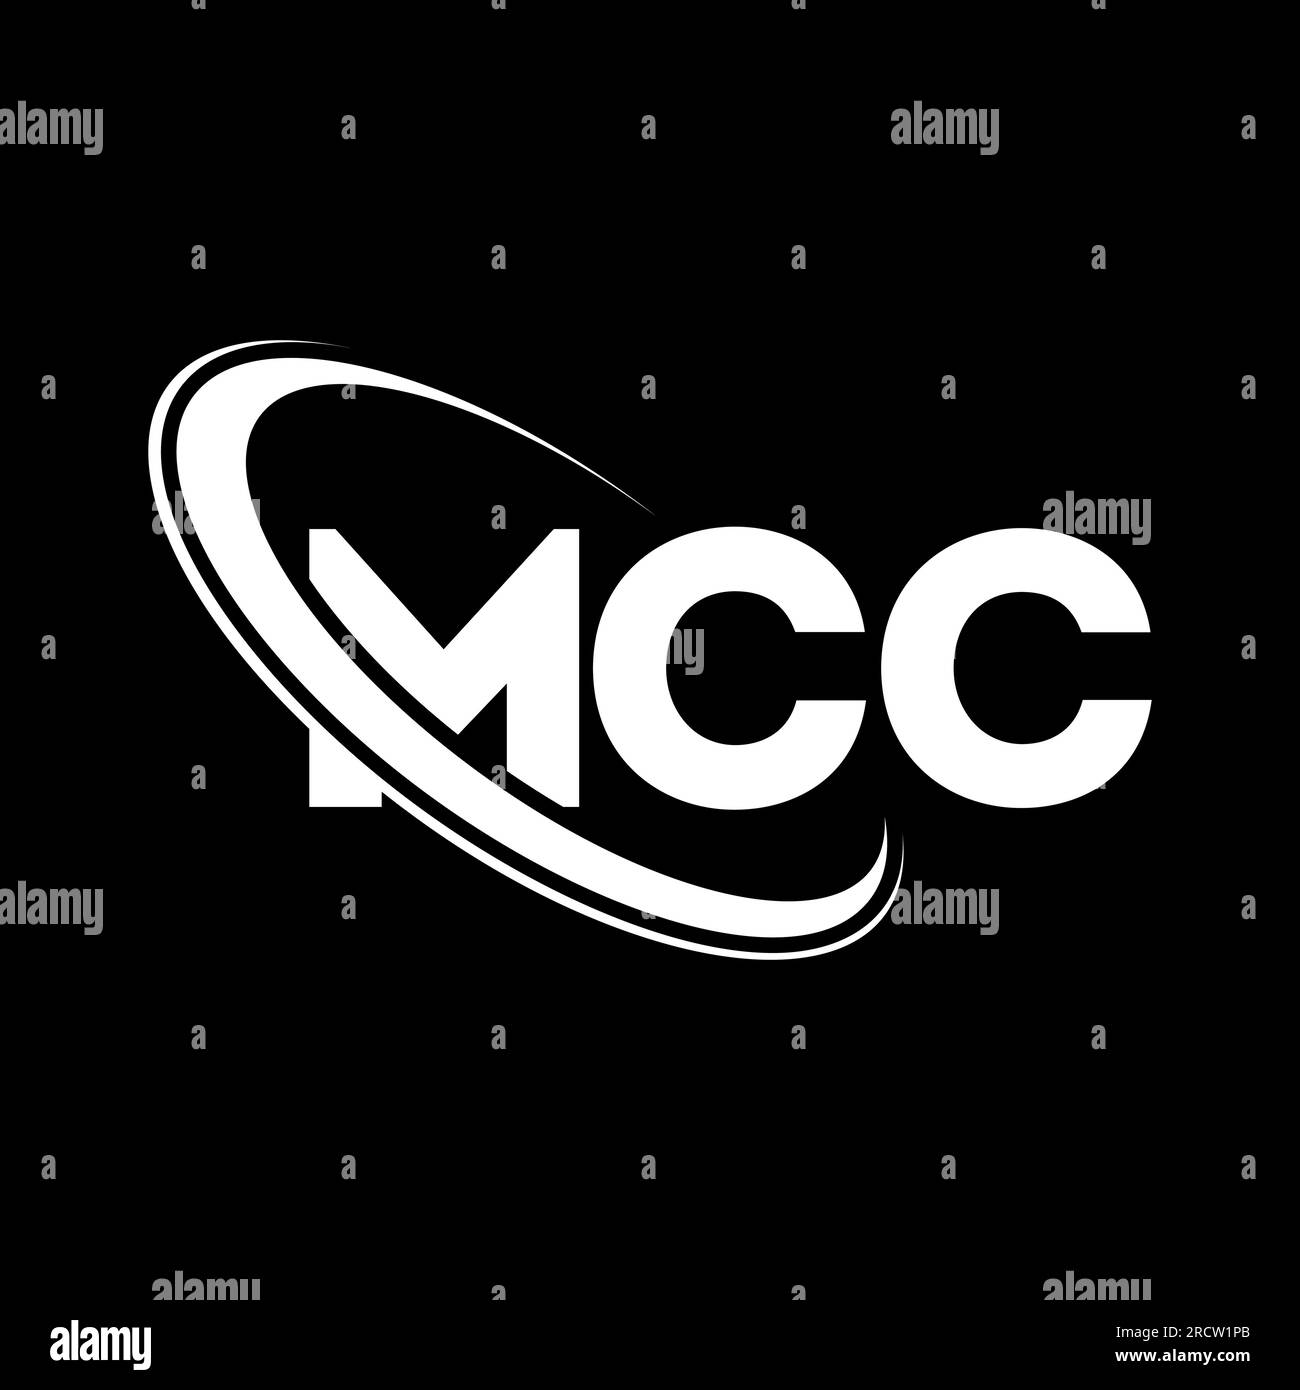 Mcc minimalist logo Stock Vector Images - Alamy